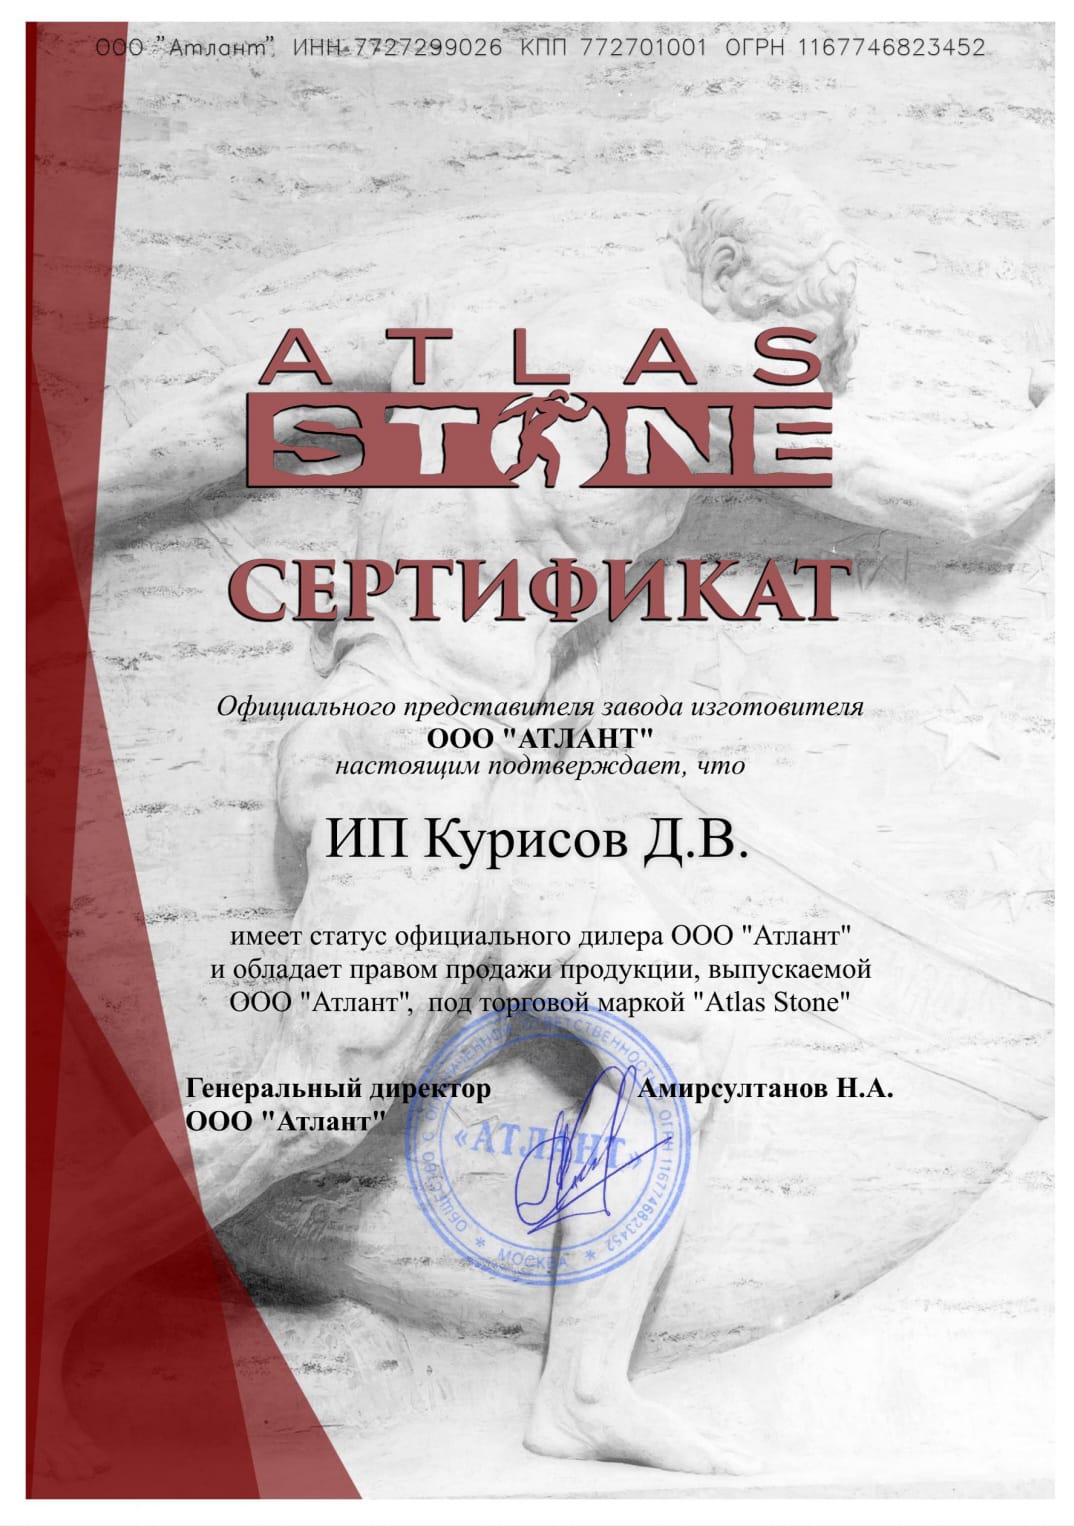 Second certificate(demo)